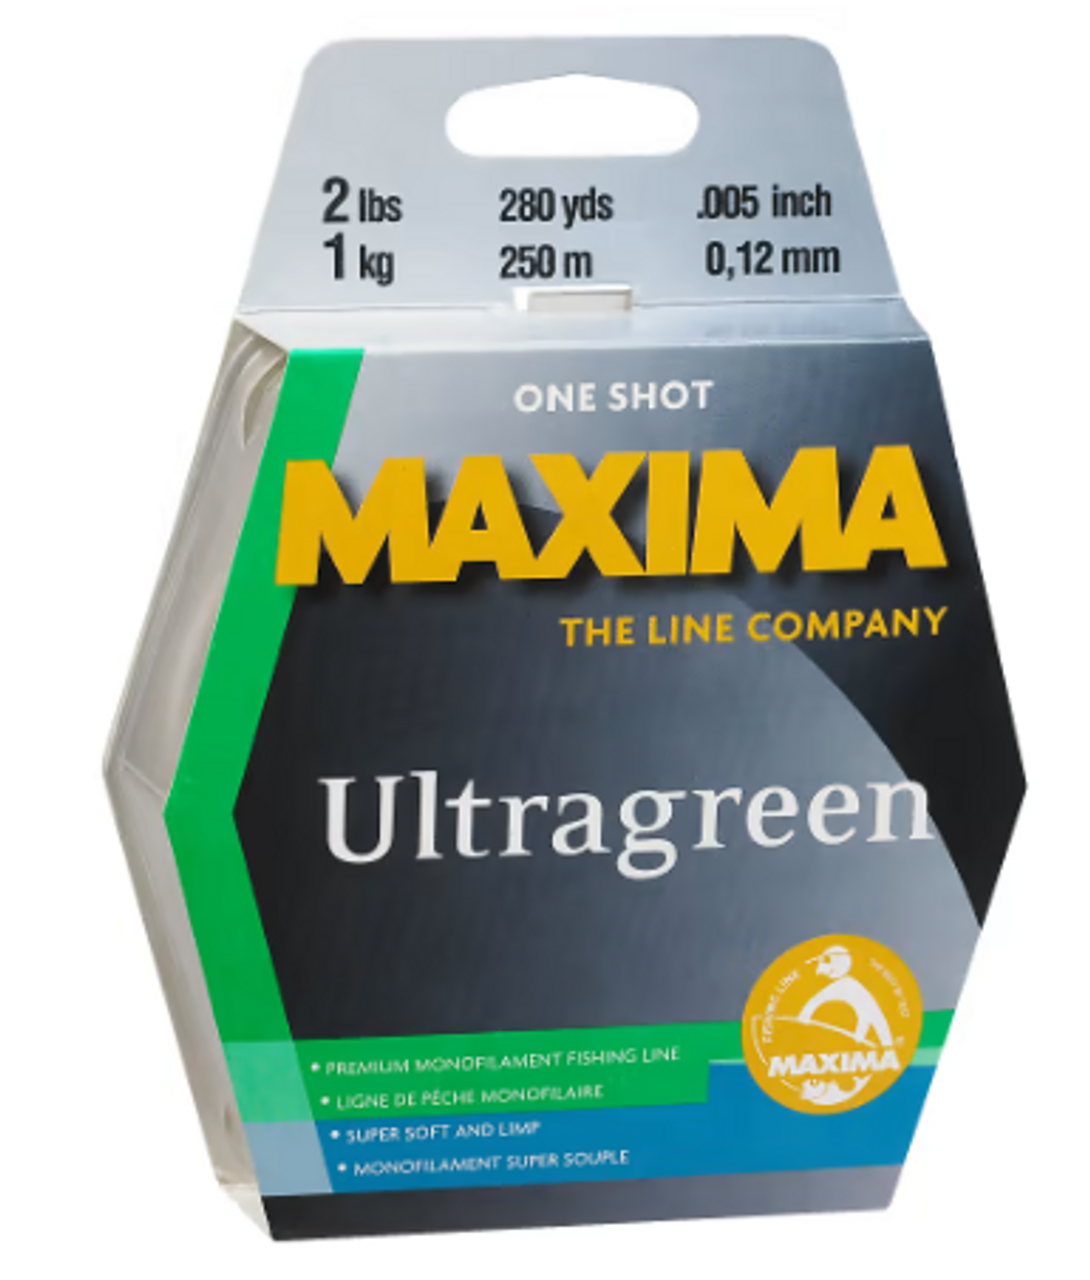 Maxima Ultragreen One Shot Fishing Line